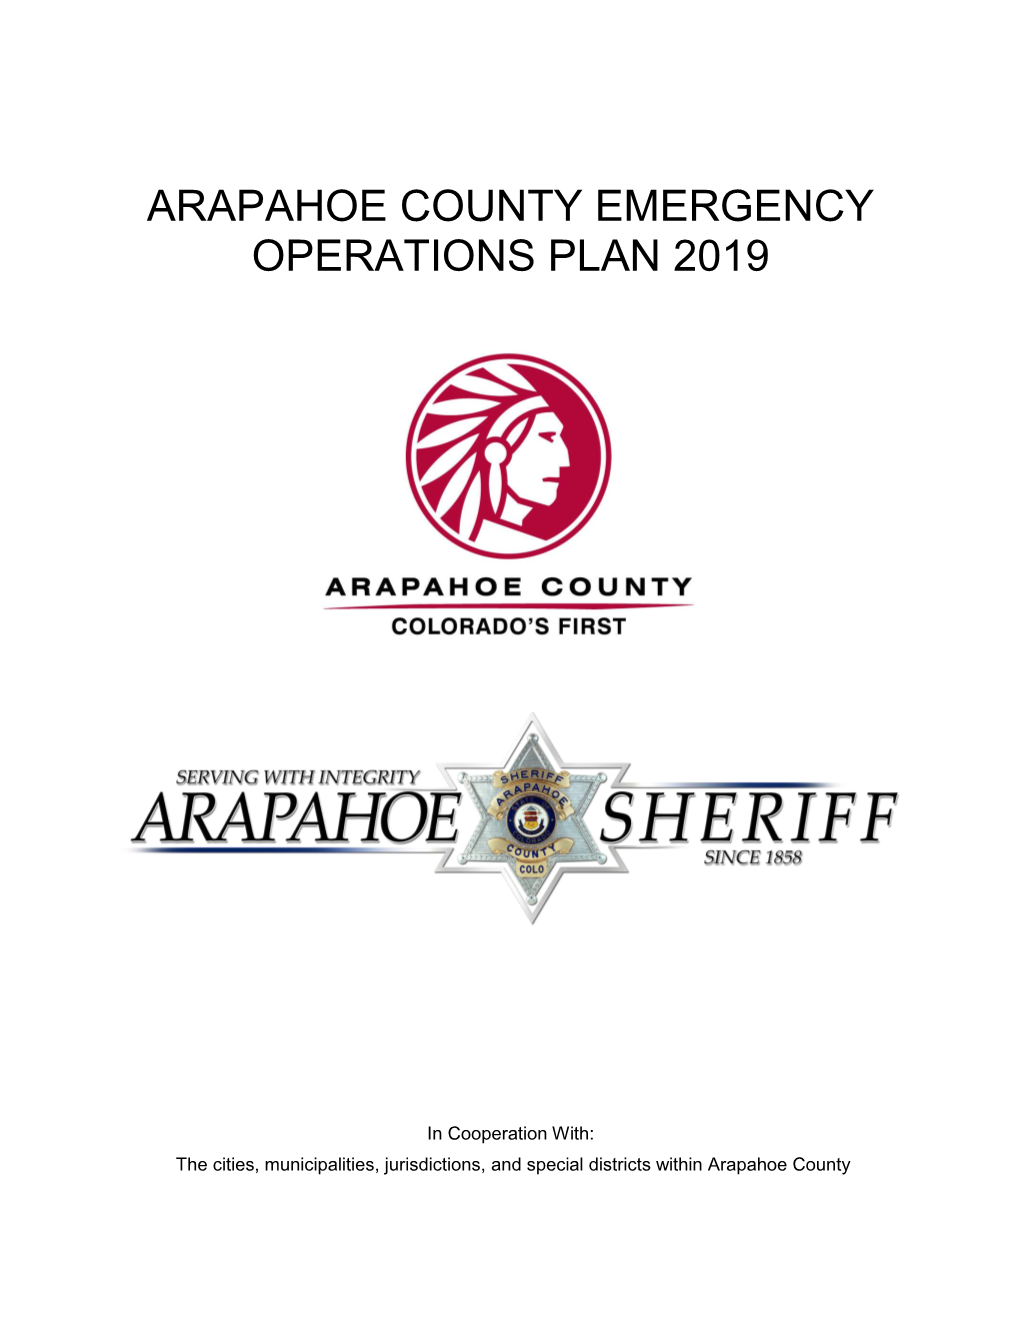 Arapahoe County Emergency Operations Plan 2019